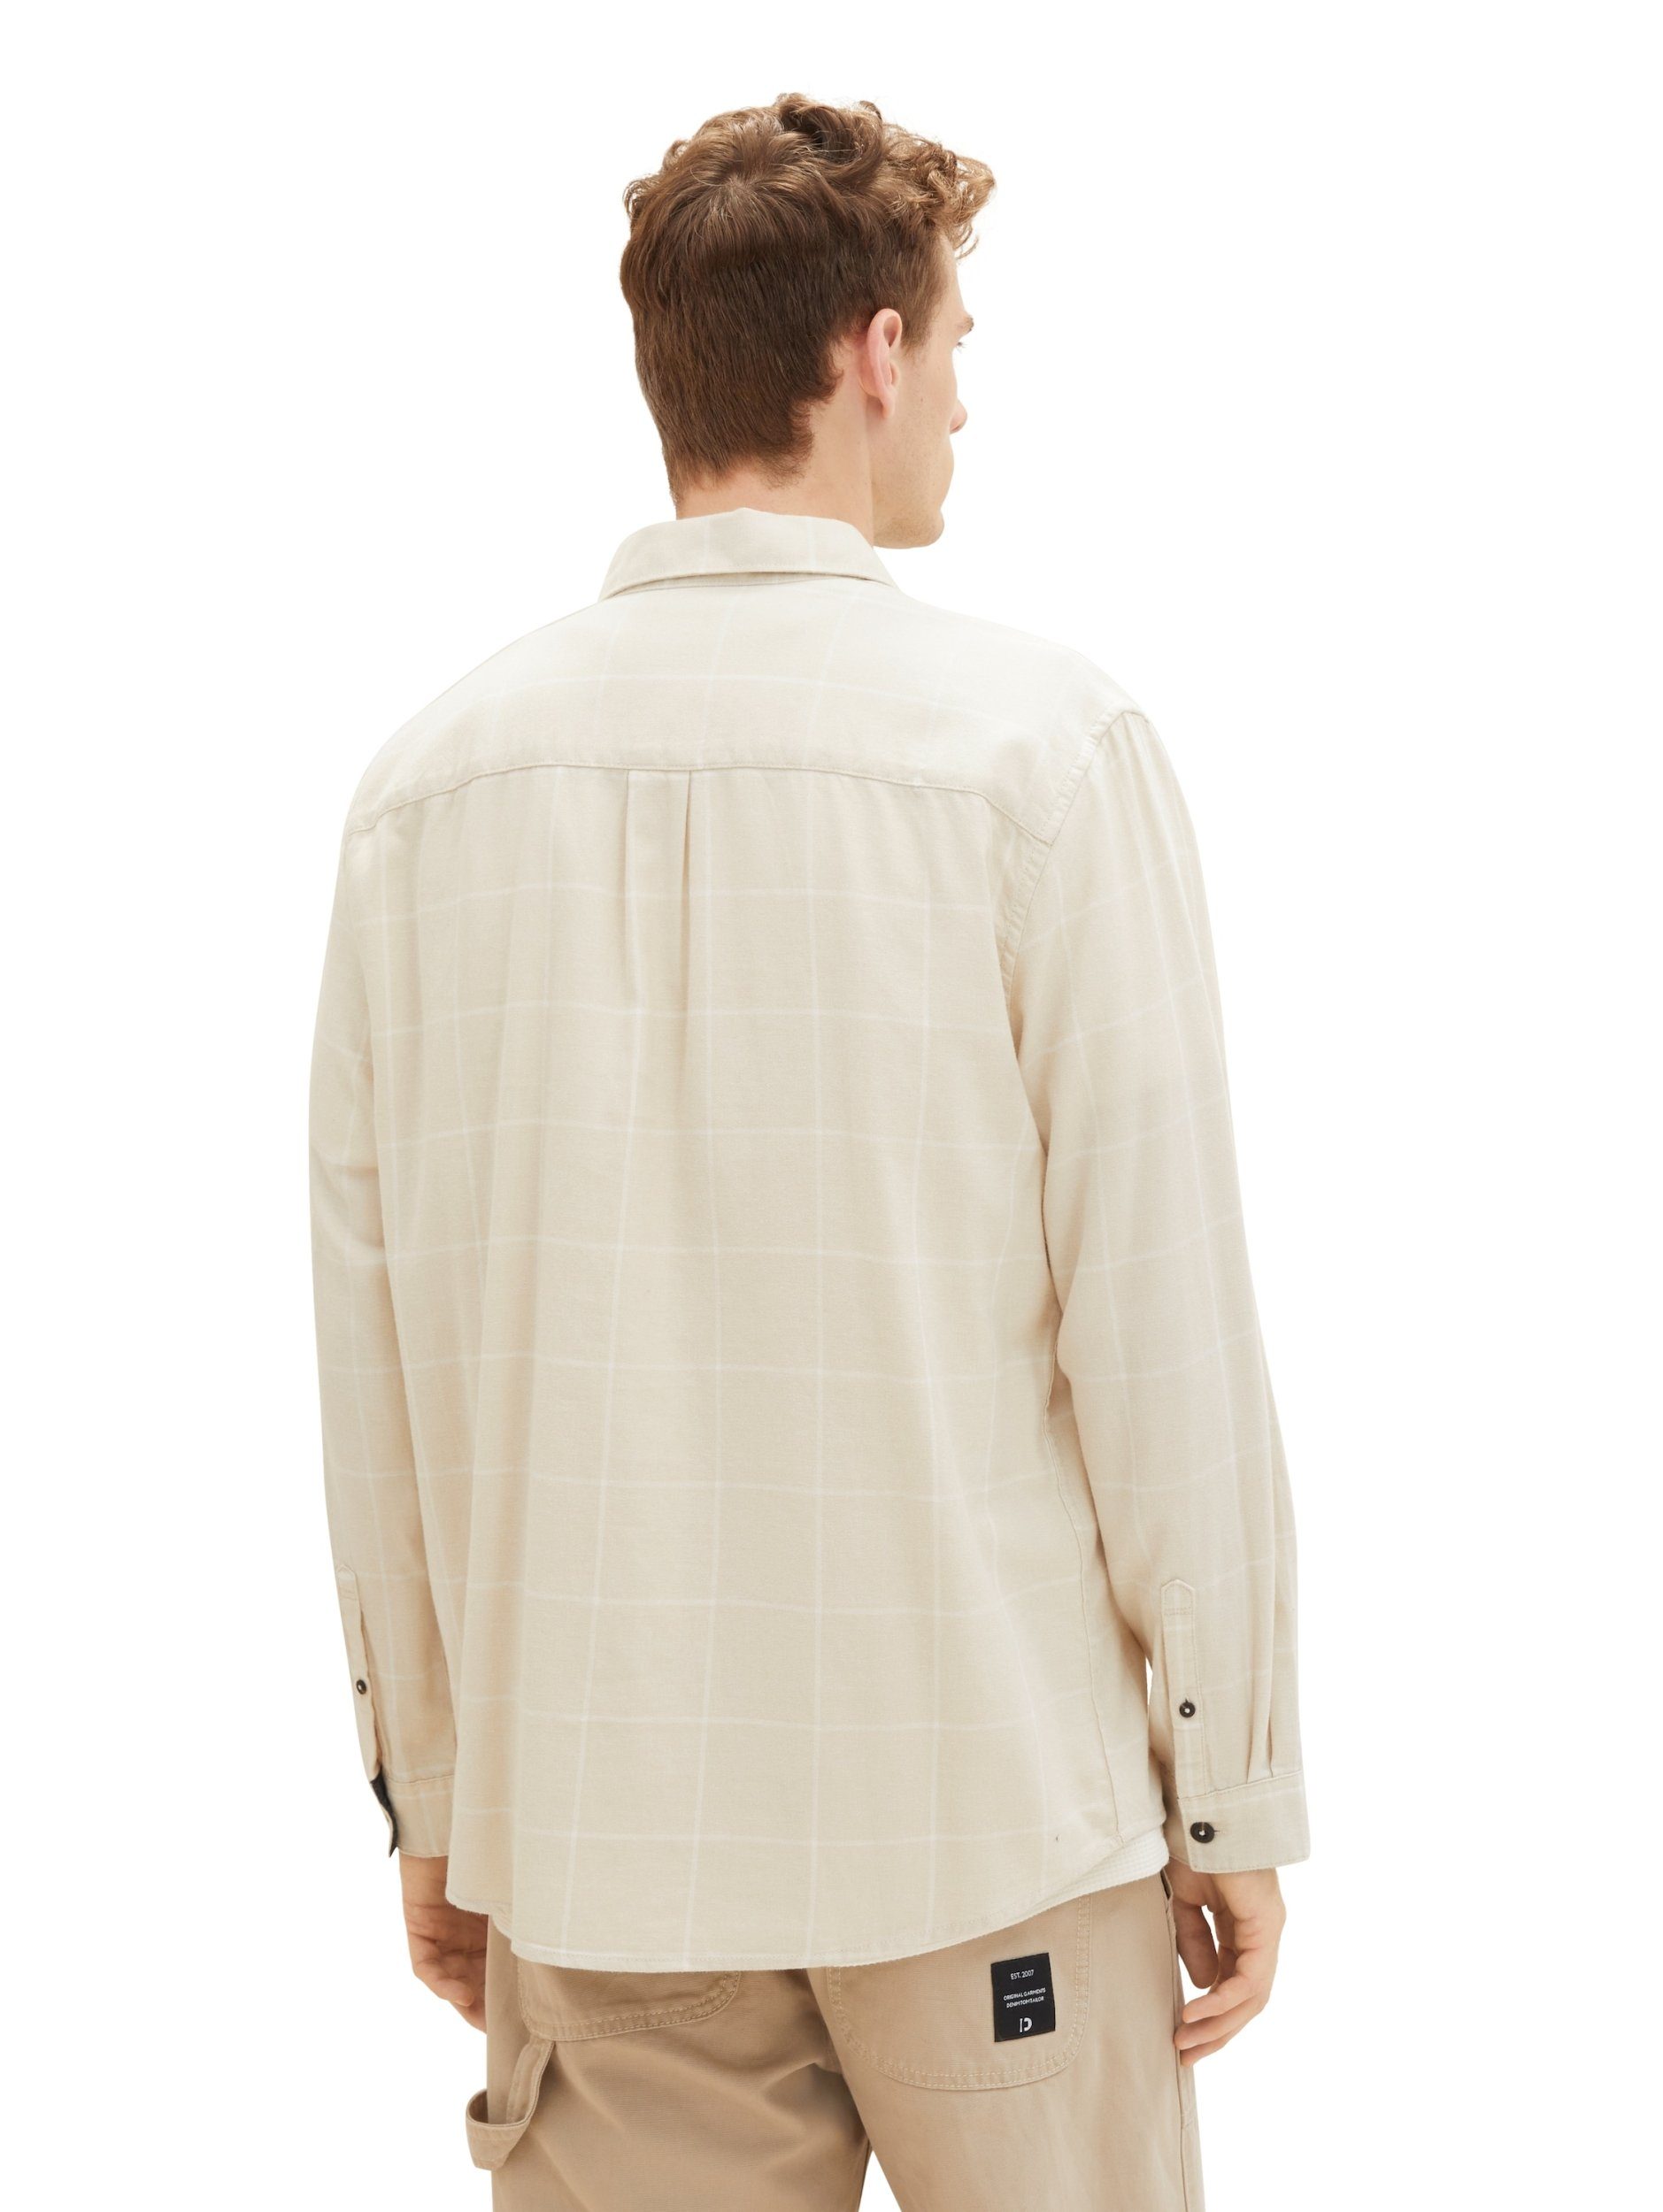 comfort TAILOR TOM tonal shirt tonal Kurzarmshirt beige checked vintage check